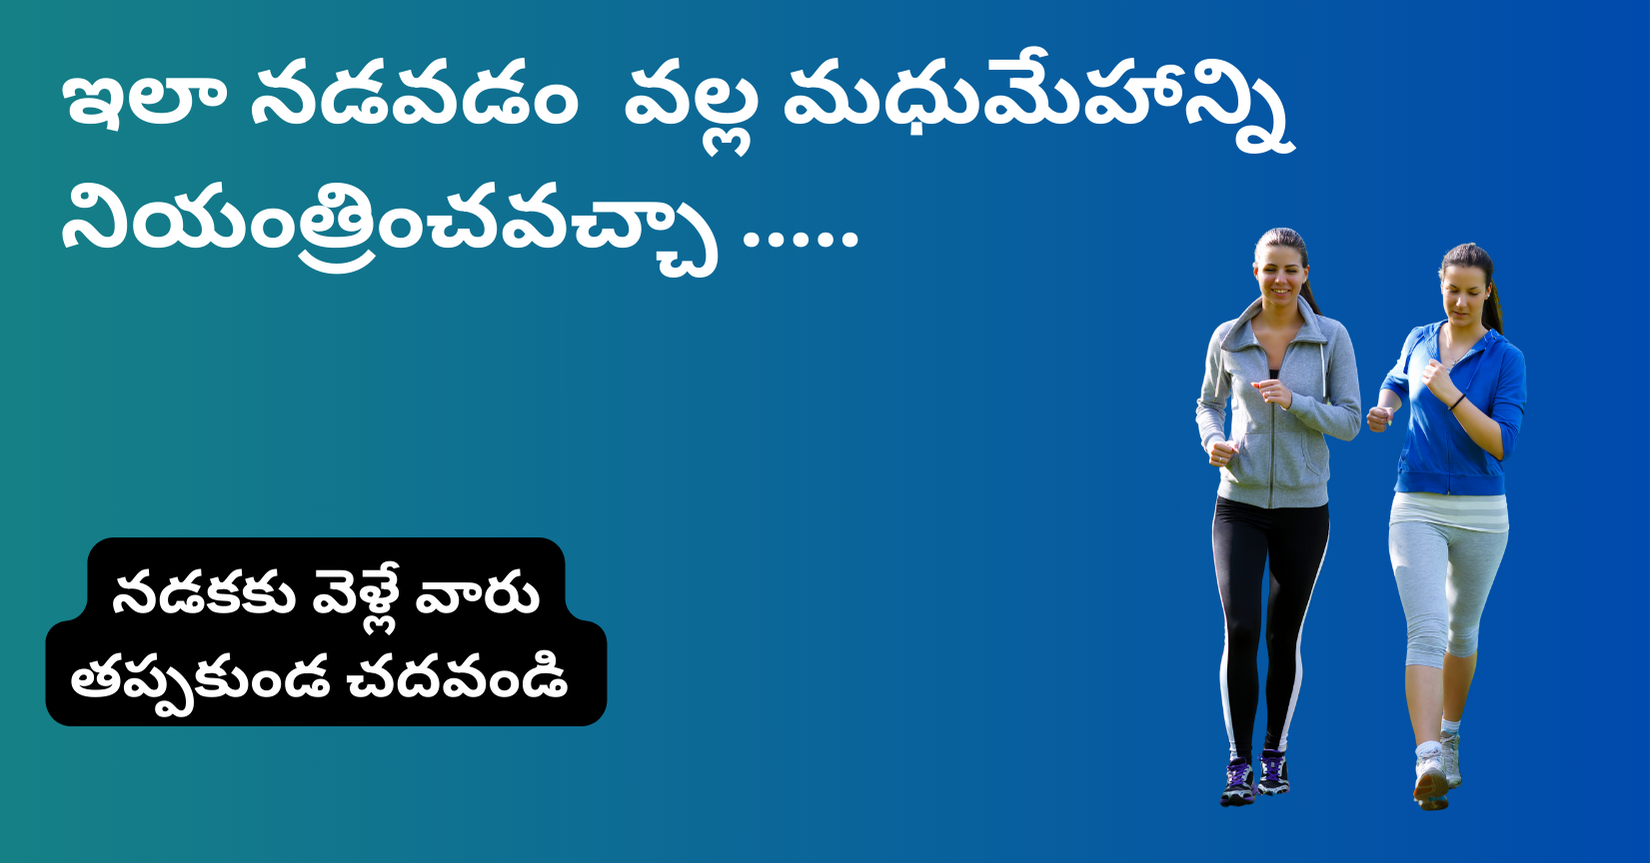 Telugu health tips 